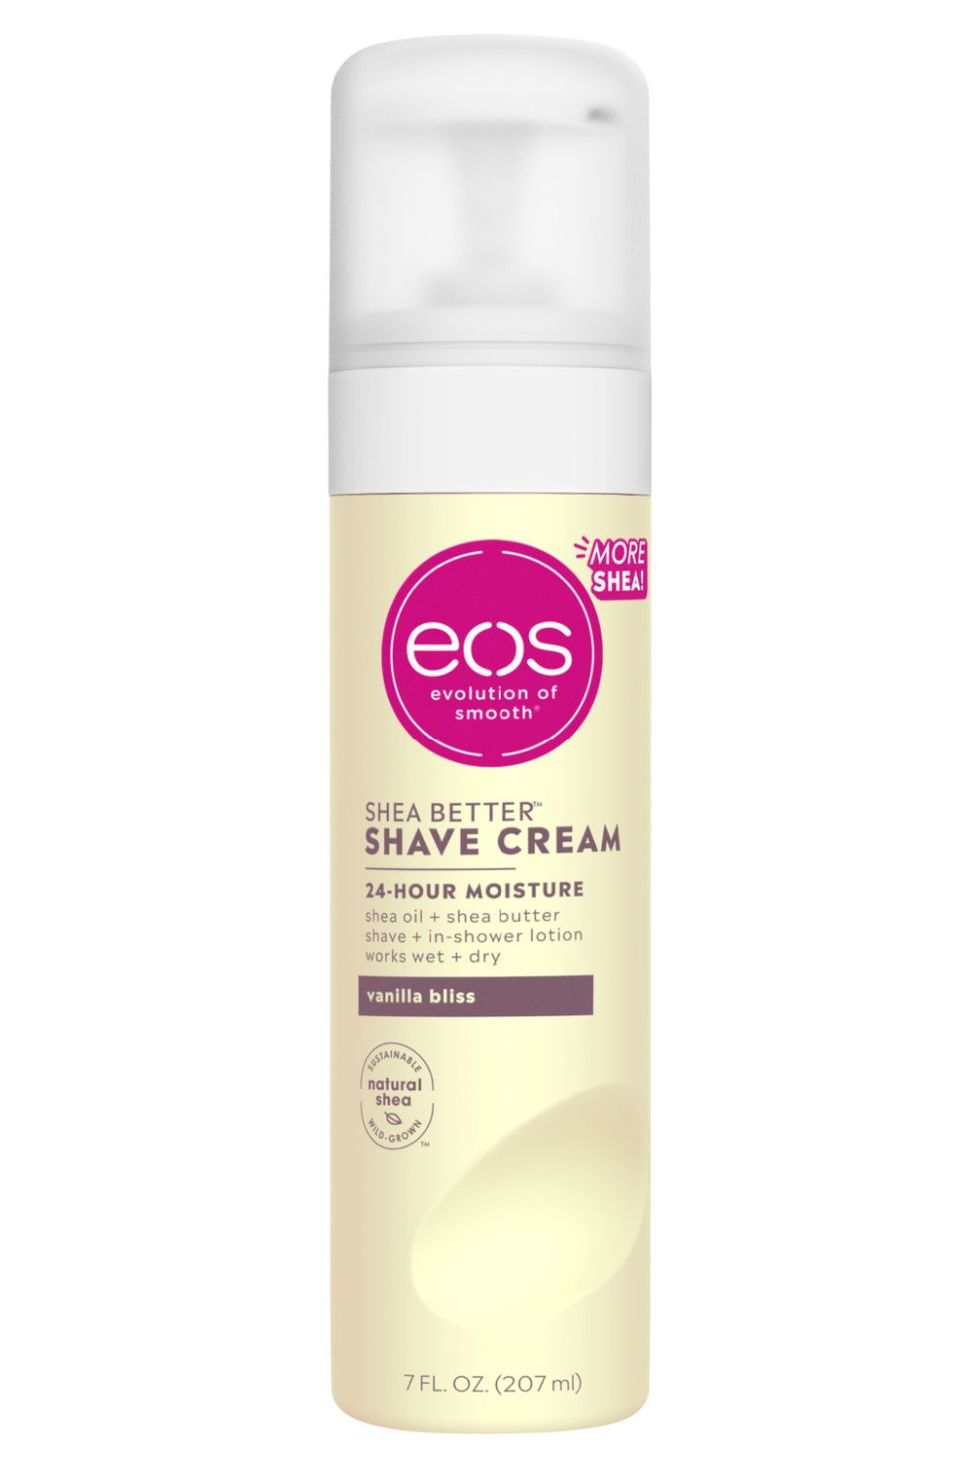 Eos Shea Better Shave Cream